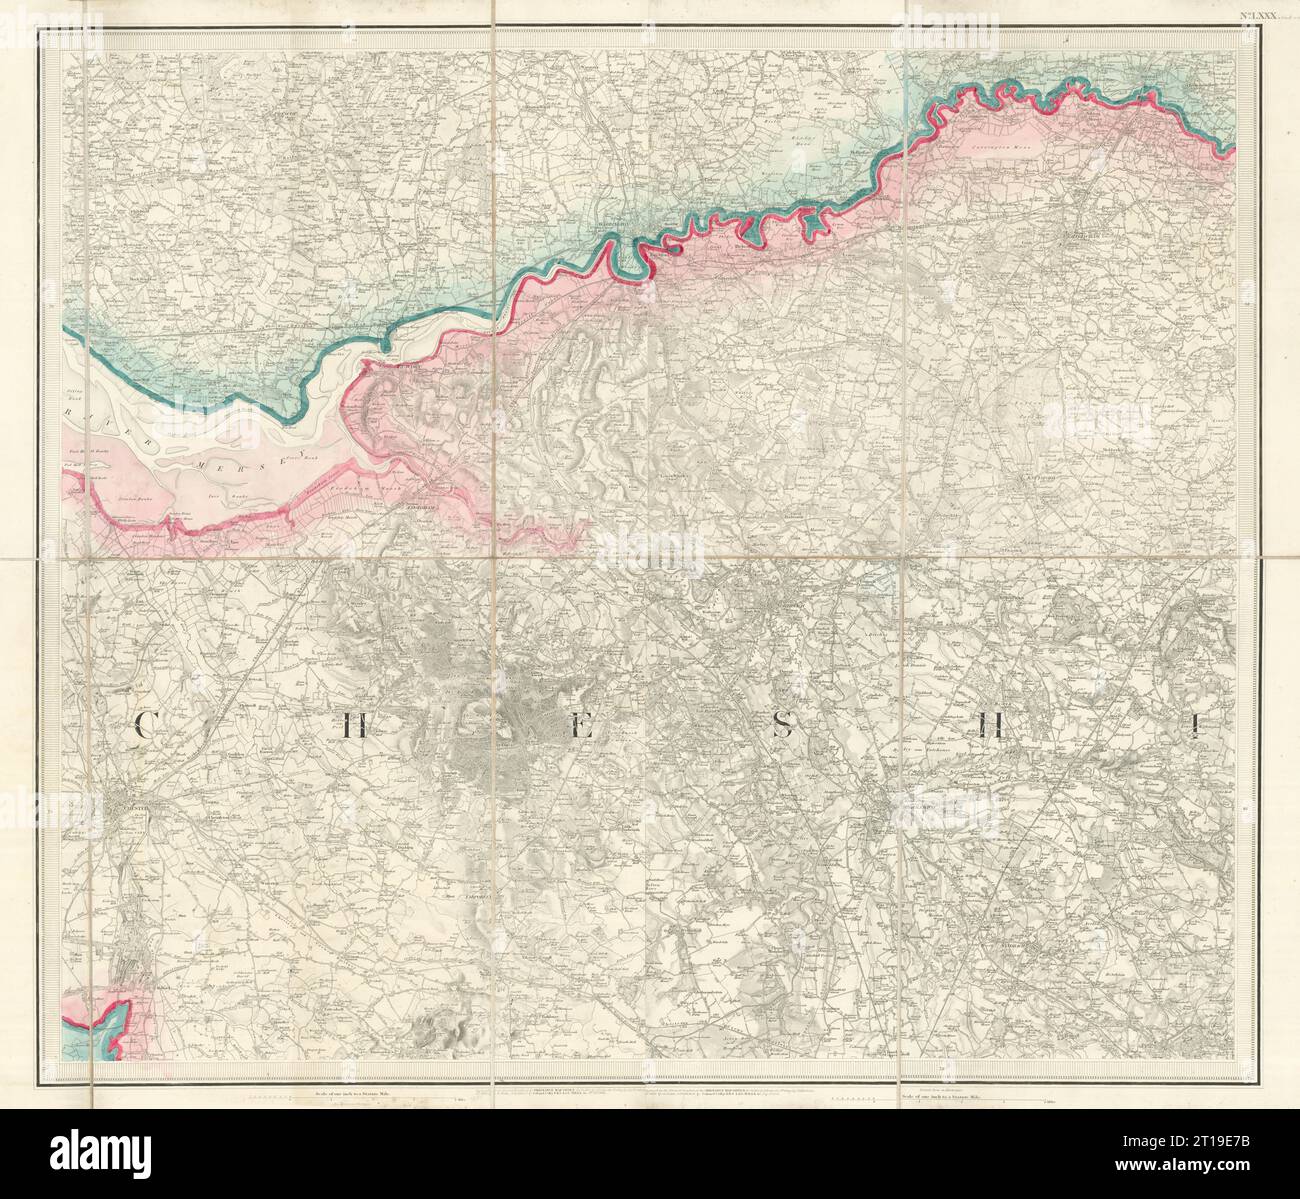 OS #80 Mersey Valley & Cheshire Plain. Warrington Runcorn Chester 1842 old map Stock Photo